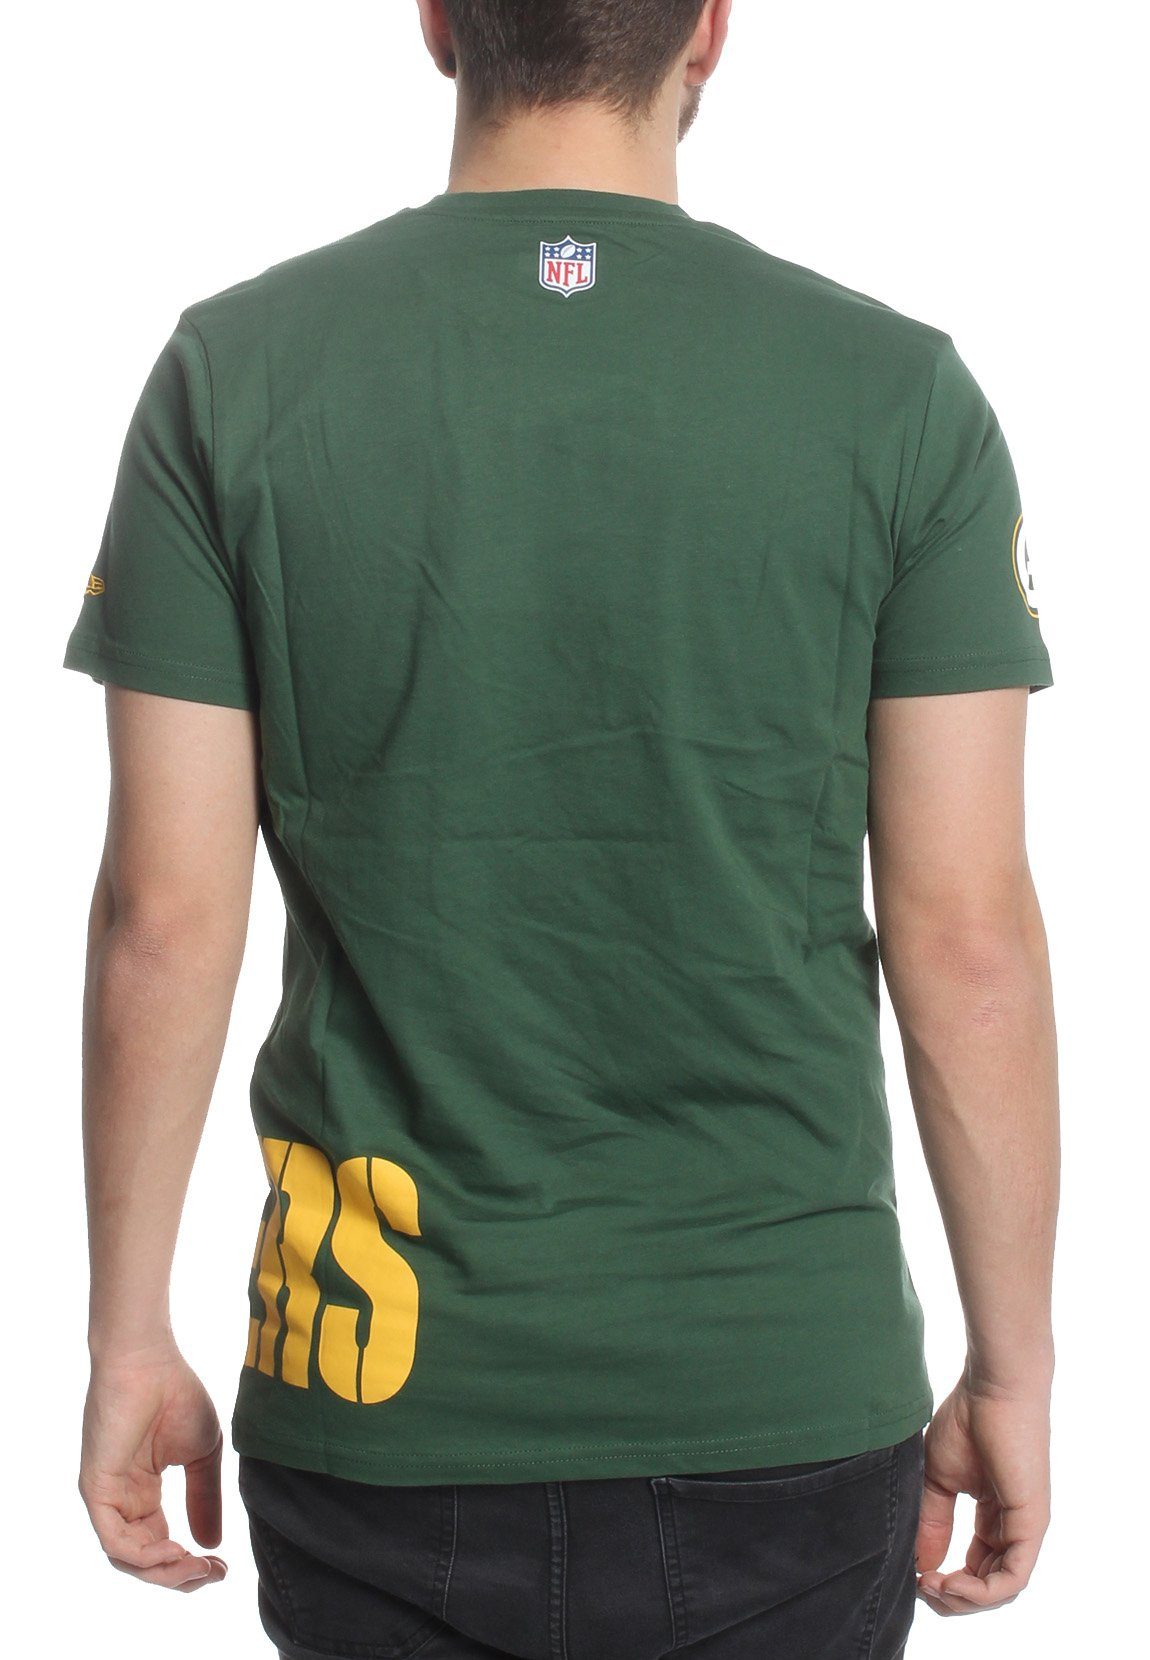 New PACKERS Around Era GREEN New Herren Era Grün NFL Wrap T-Shirt Tee BAY